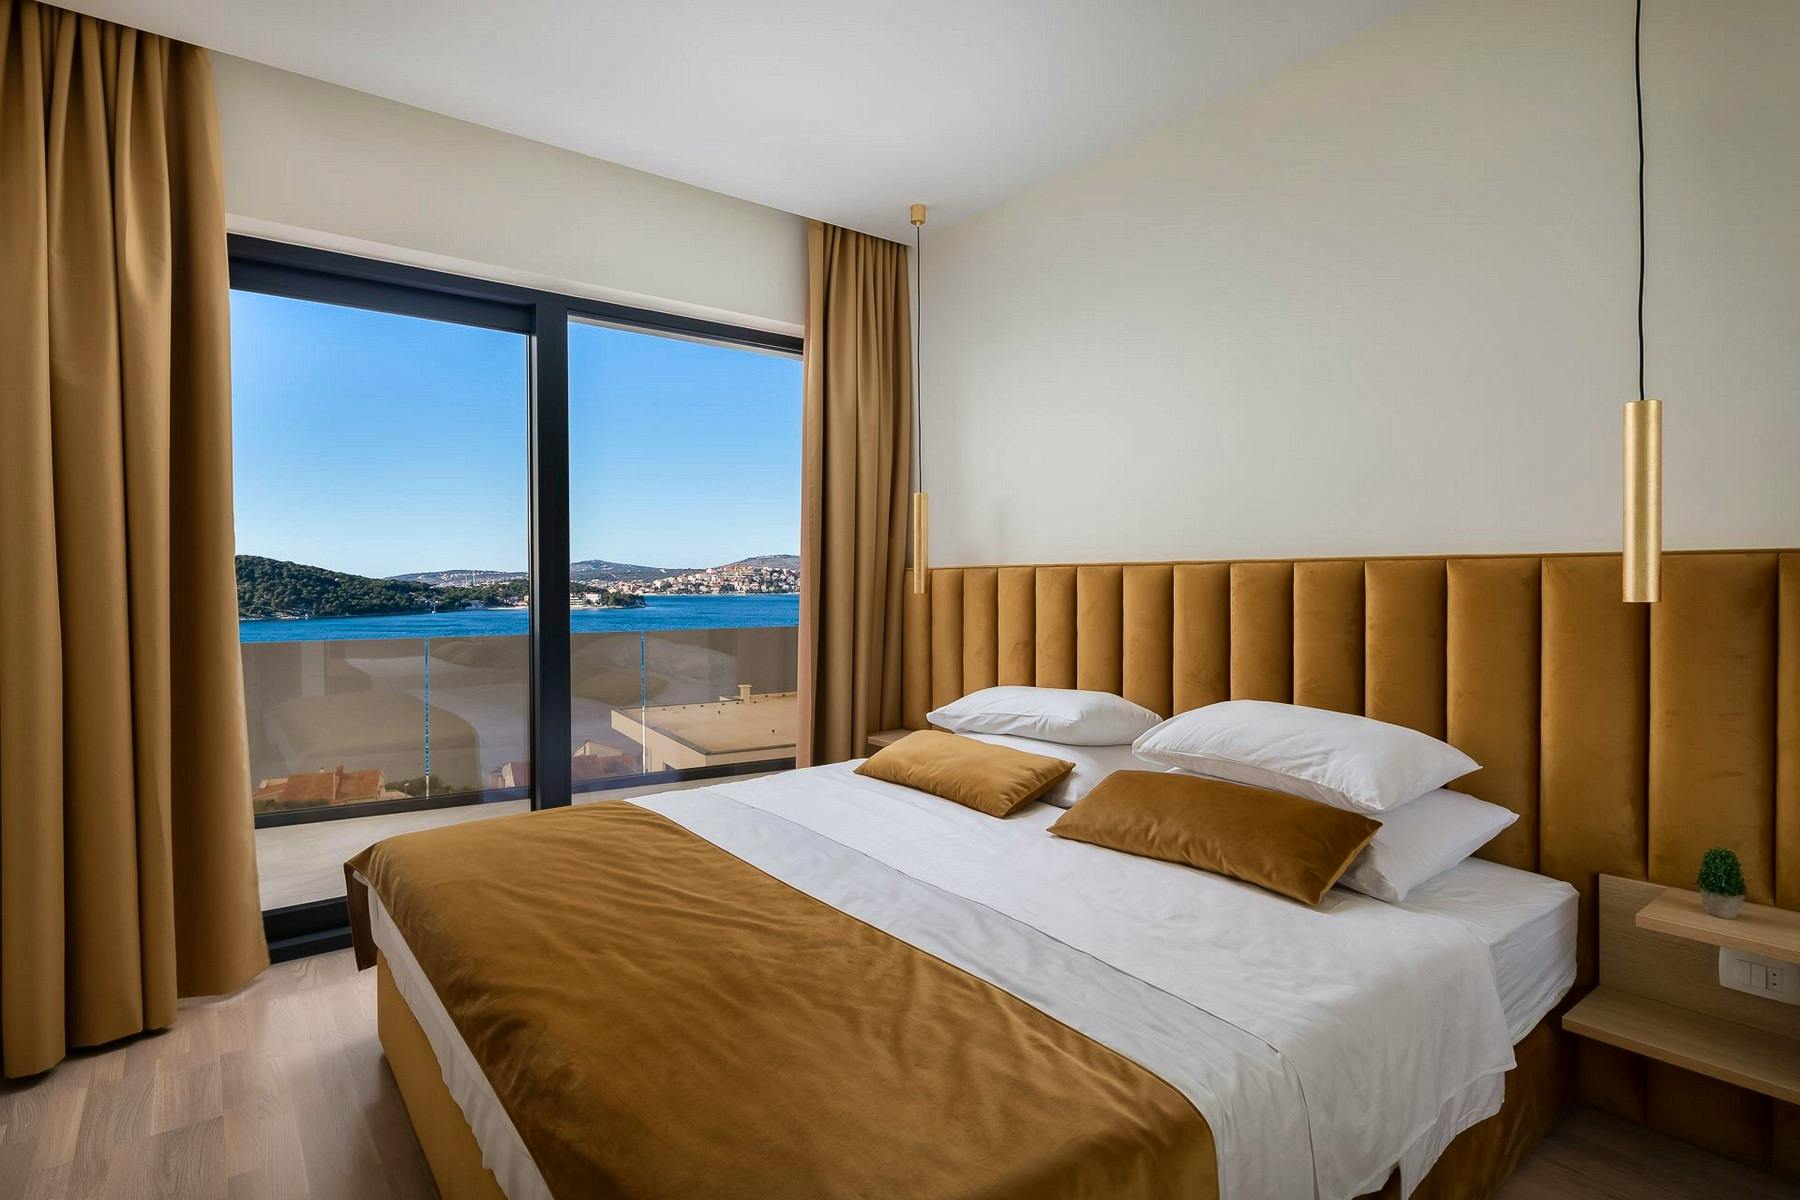 Spacious en-suite bedroom with sea view